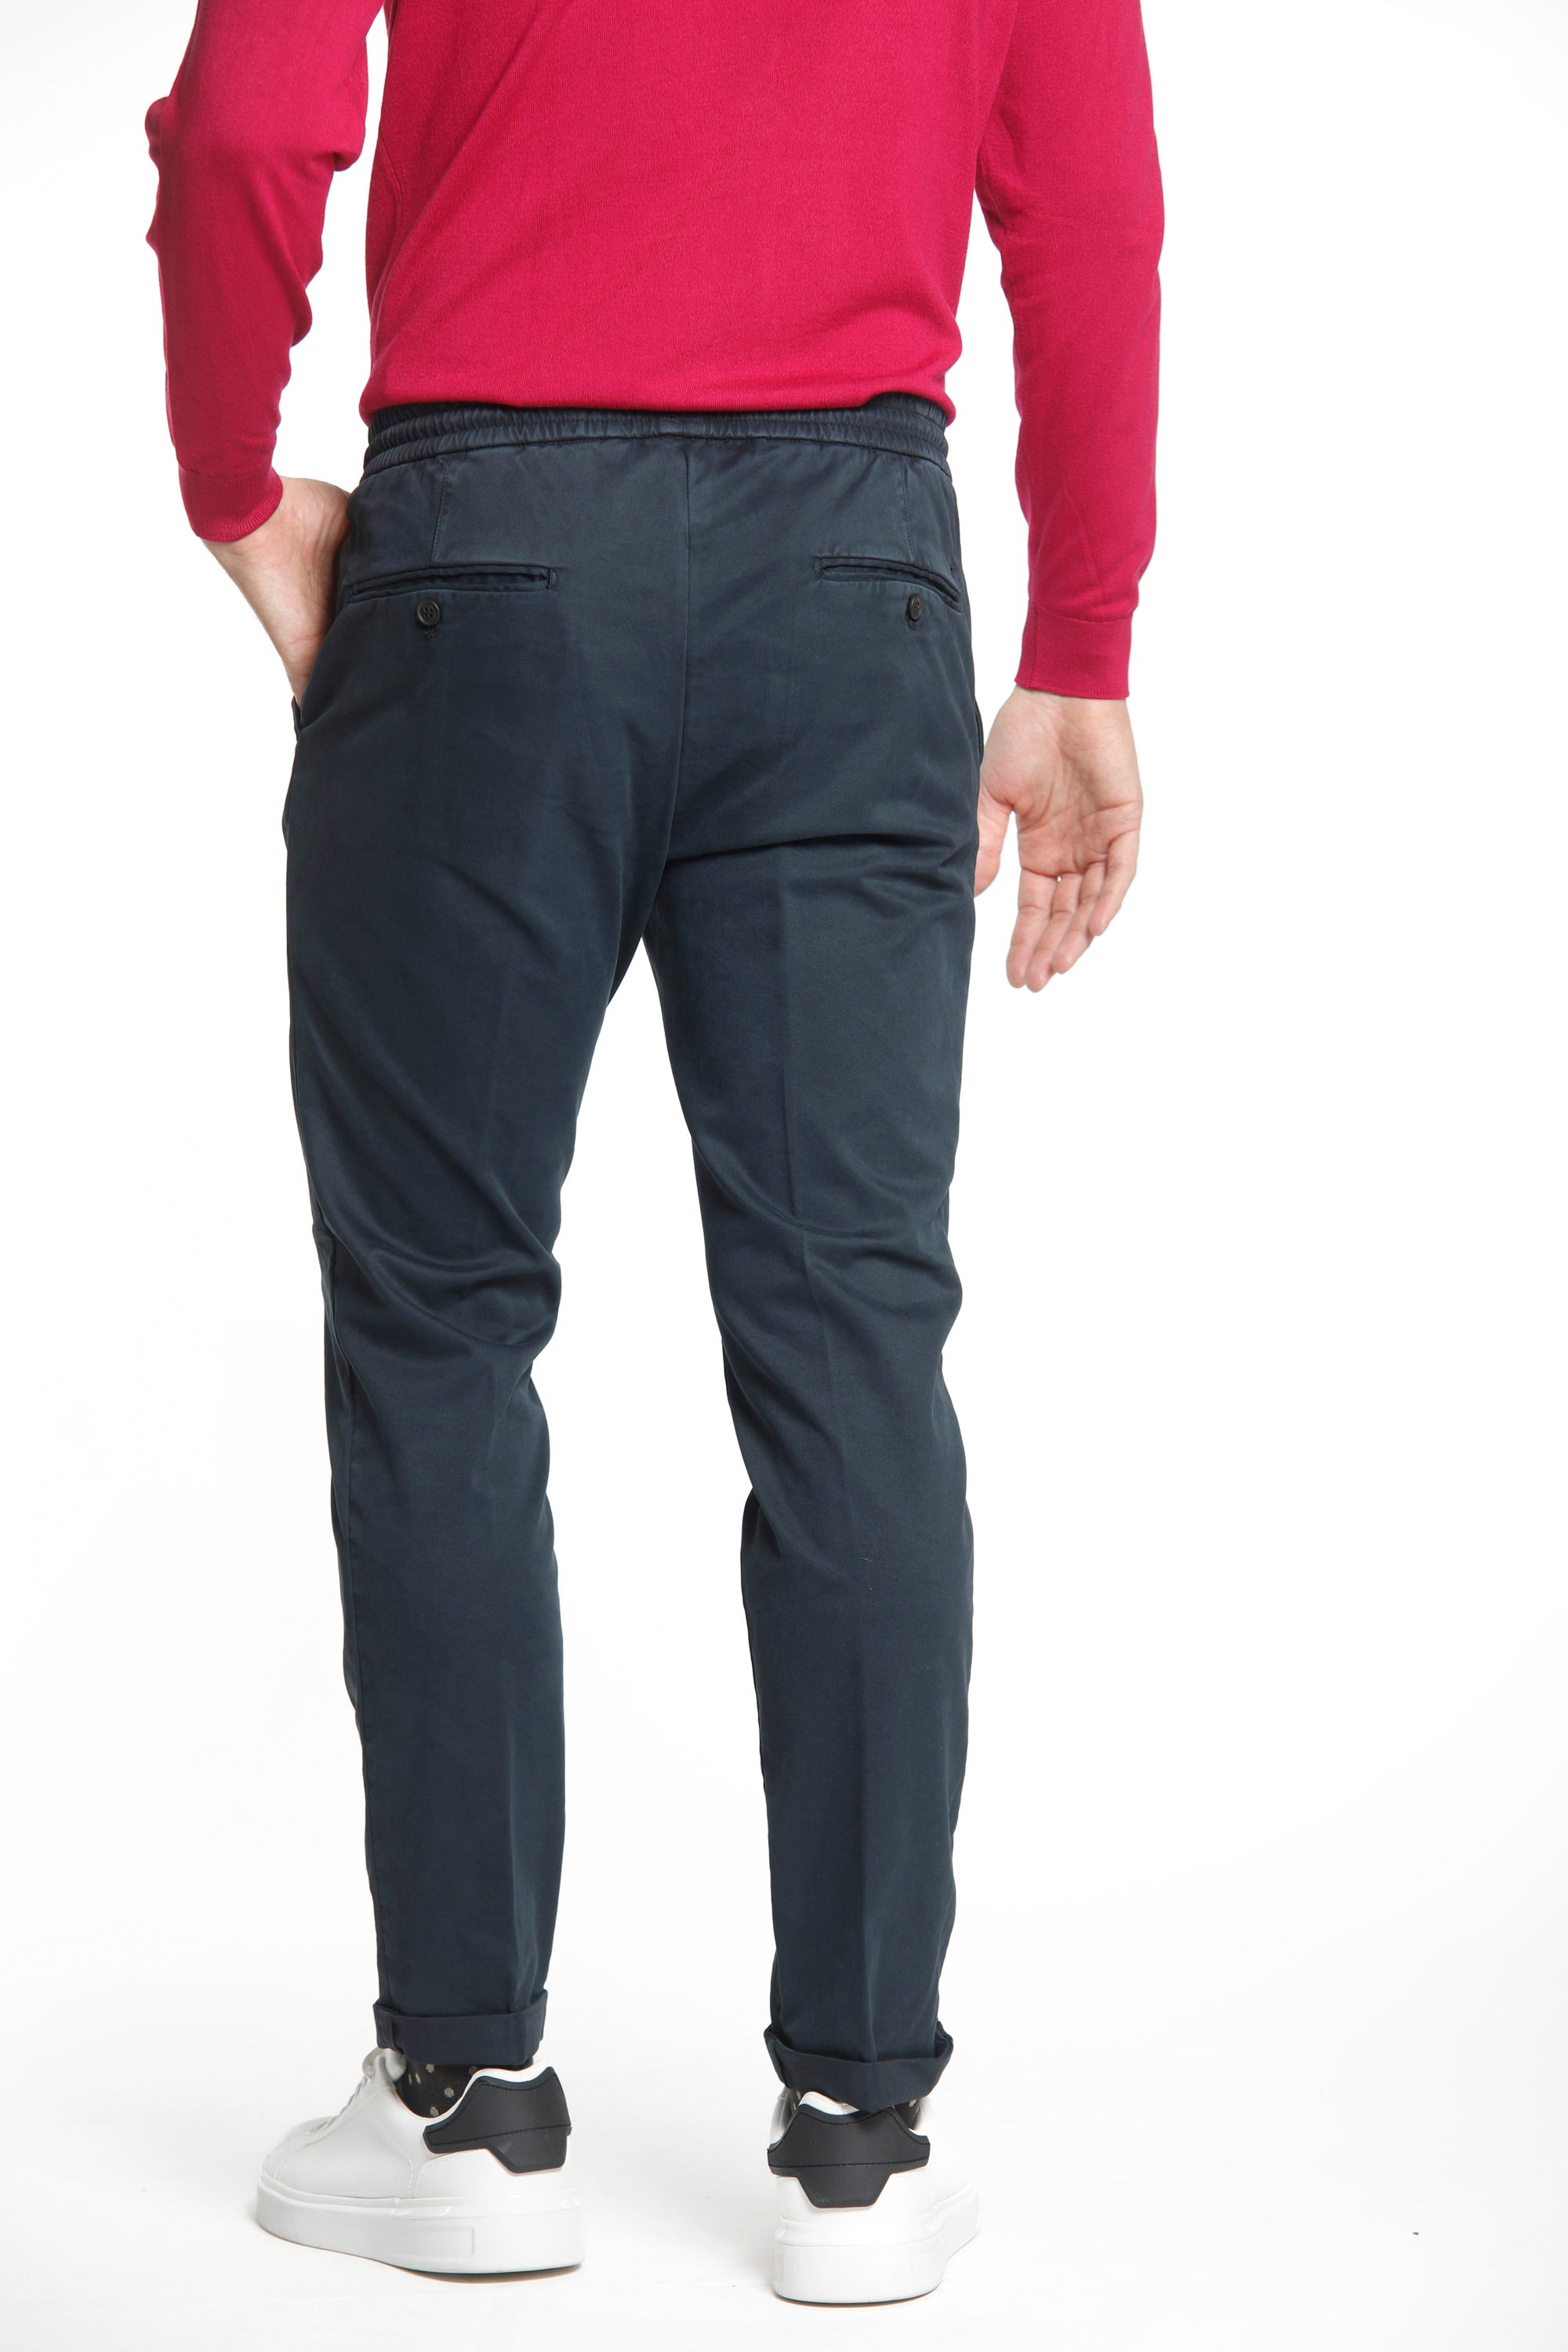 New York Sack pantalone chino jogger uomo in cotone modal stretch regular fit